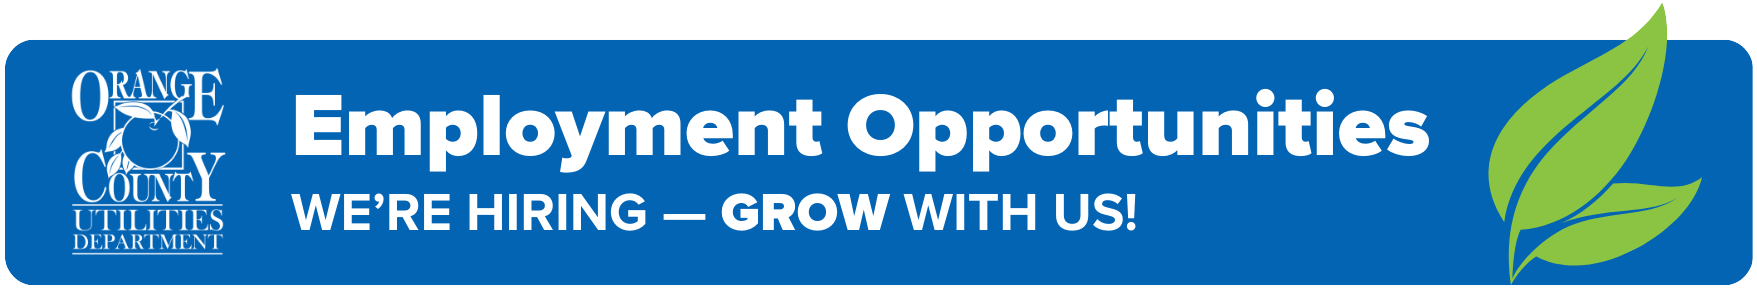 Orange County Utilities Department - Employment Opportunities - WE’RE HIRING - GROW WITH US!